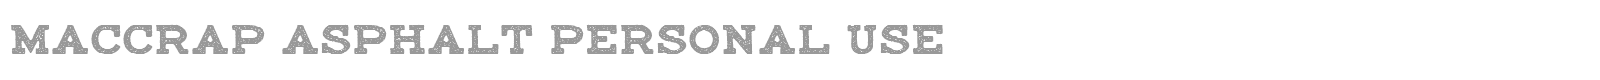 Maccrap Asphalt font preview